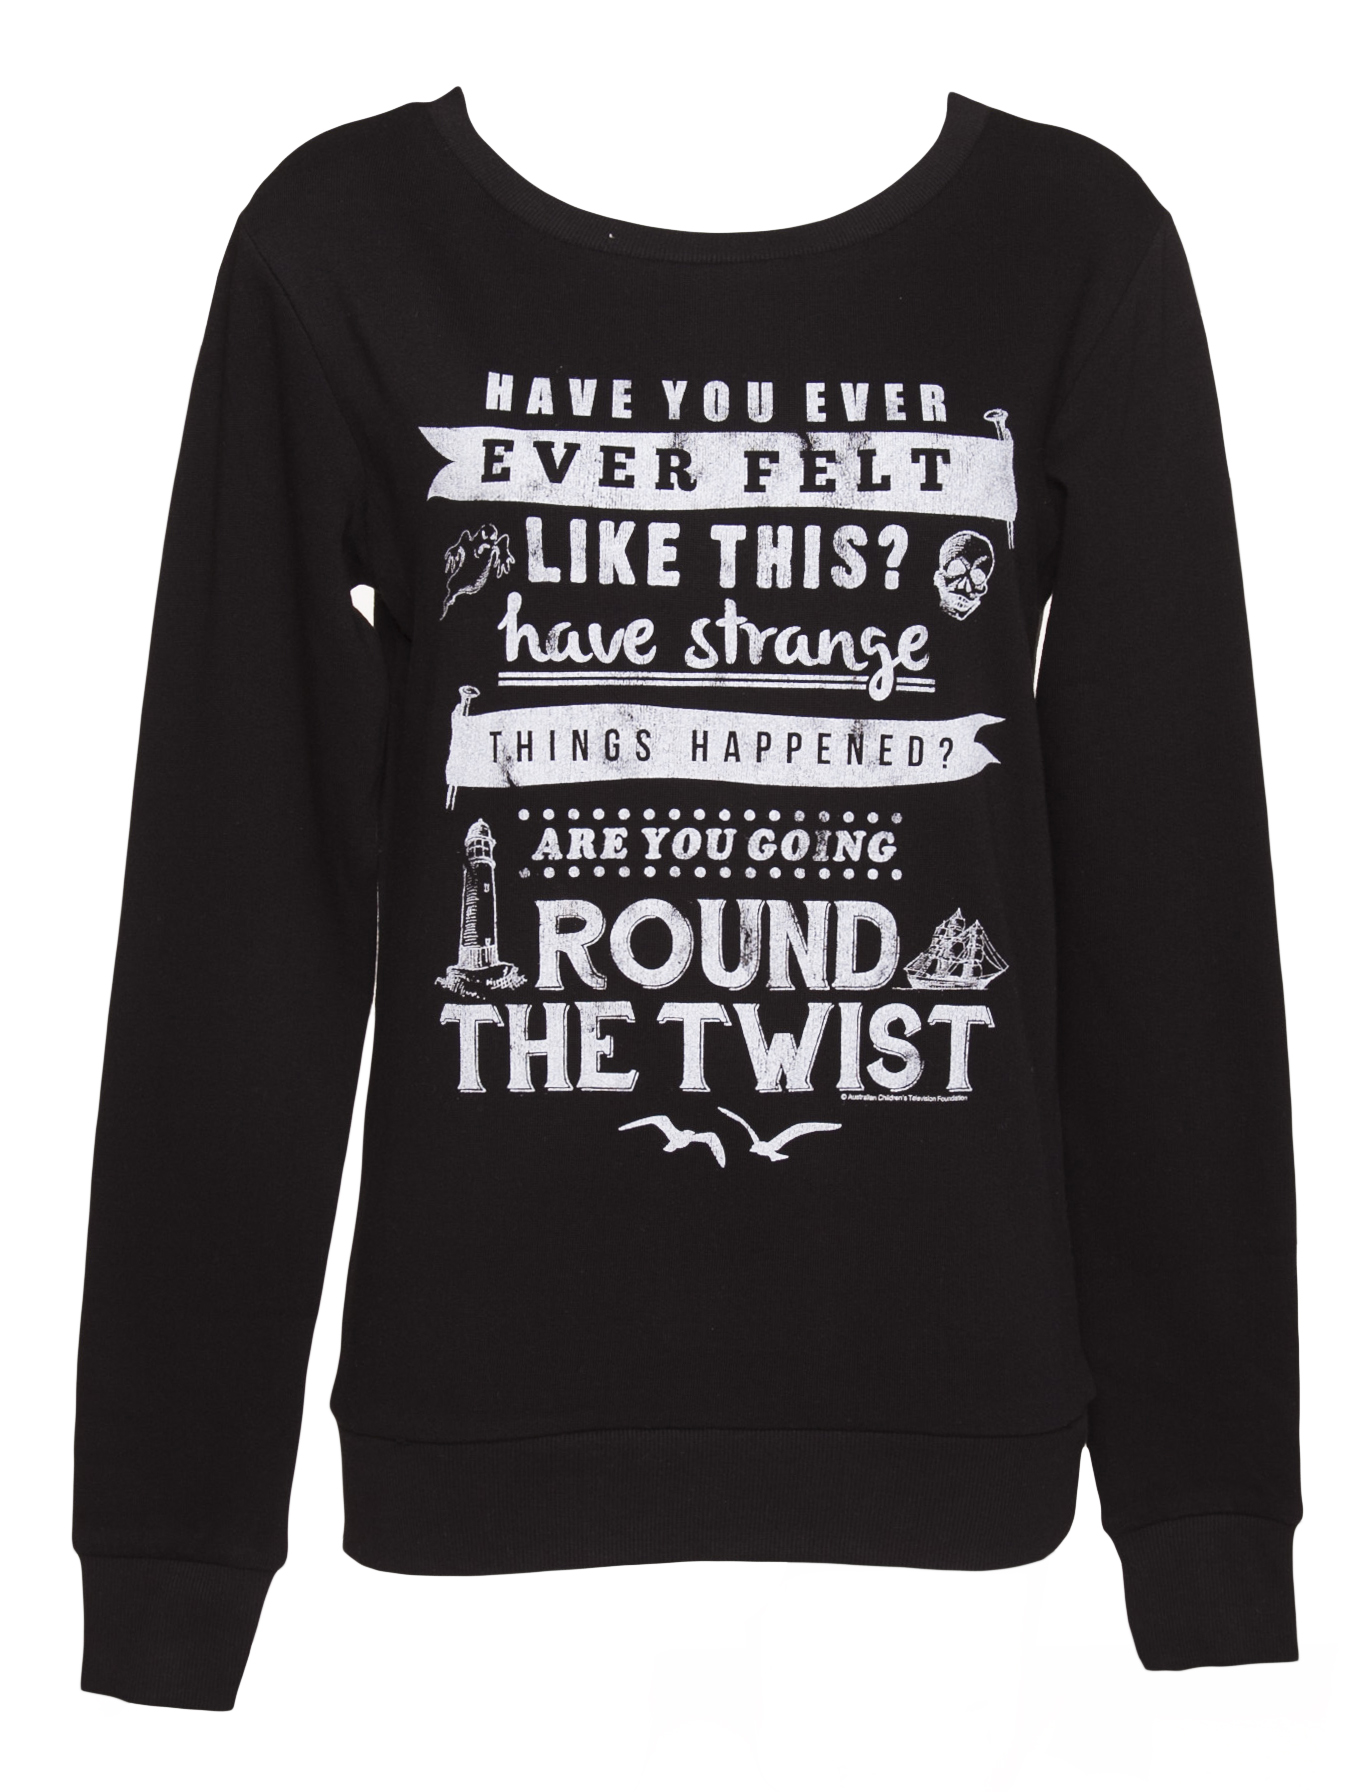 Ladies Black Round The Twist Theme Tune Sweater